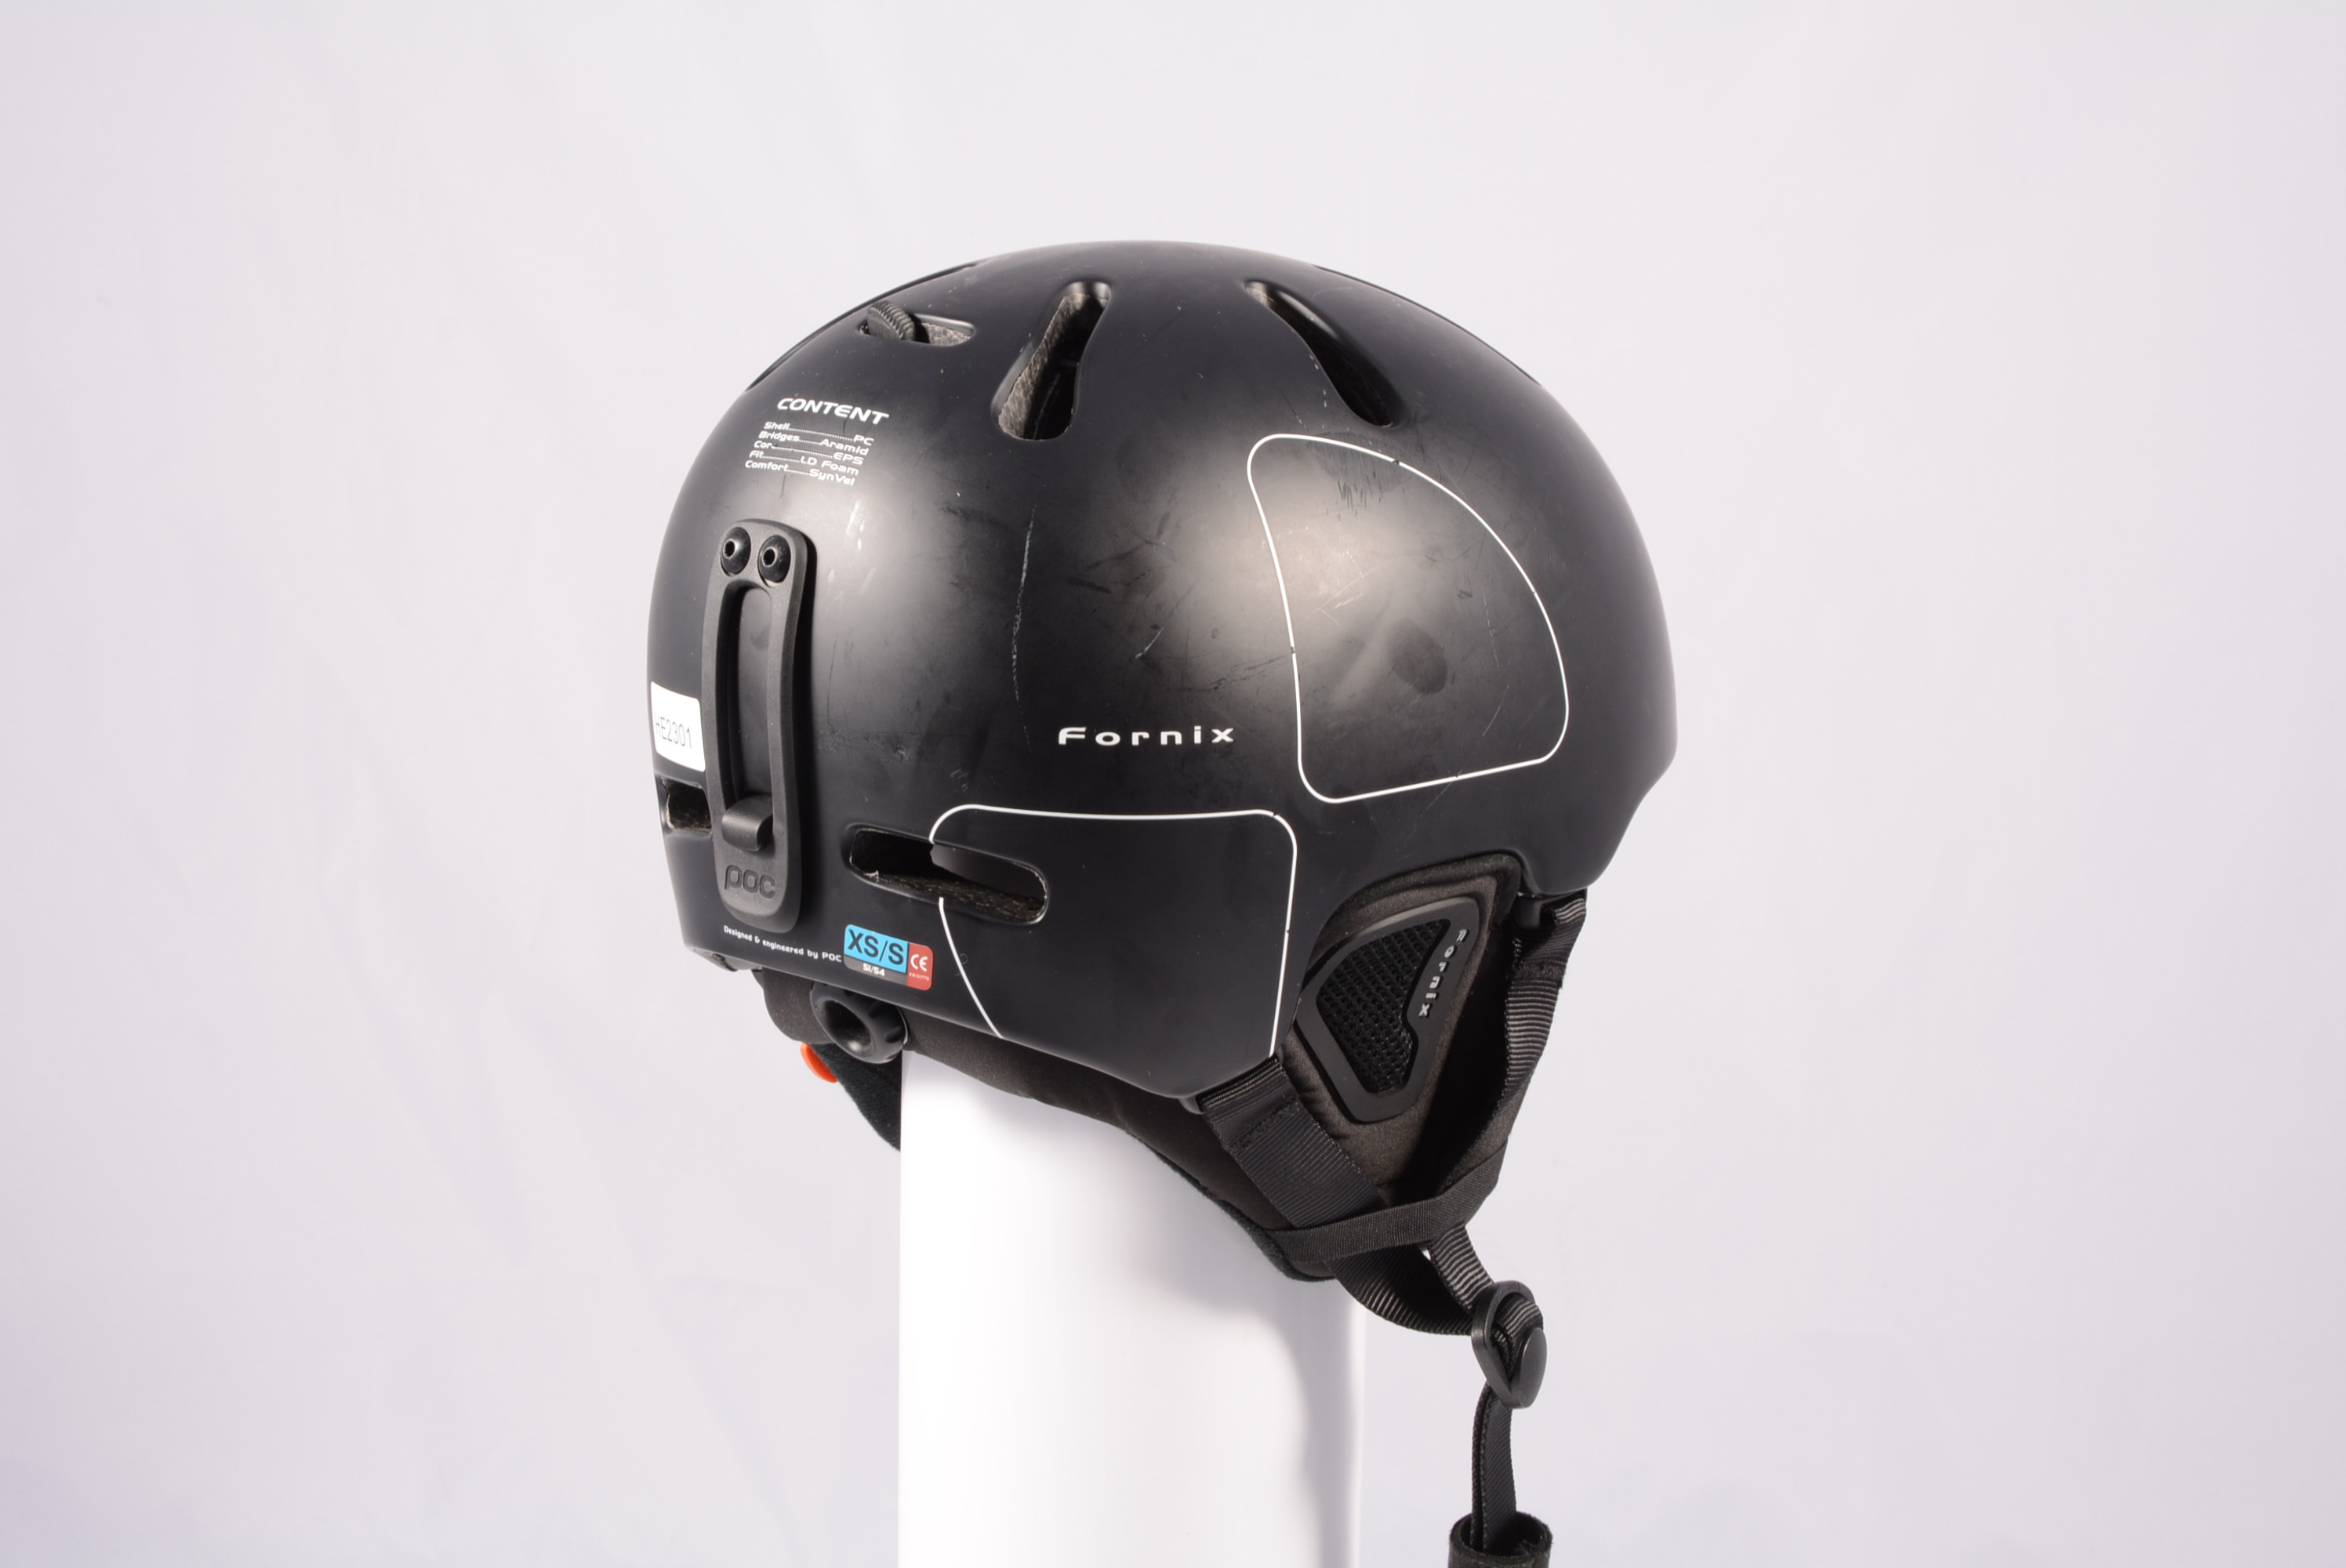 Skihelm/Snowboard Helm POC FORNIX 2019 Black, Air ventilation